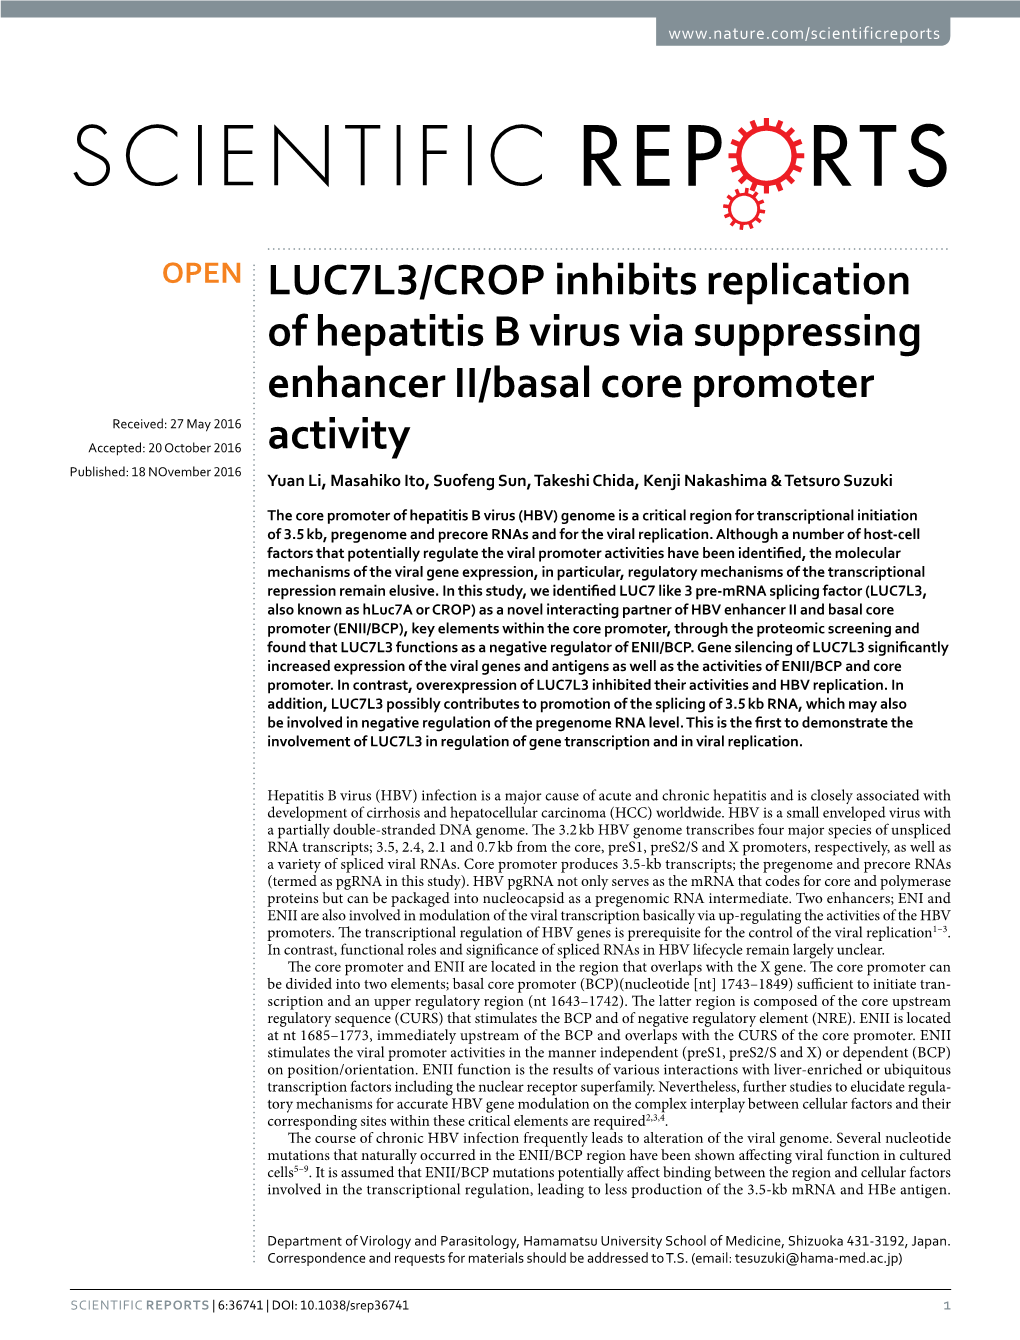 LUC7L3/CROP Inhibits Replication of Hepatitis B Virus Via Suppressing Enhancer II/Basal Core Promoter Activity